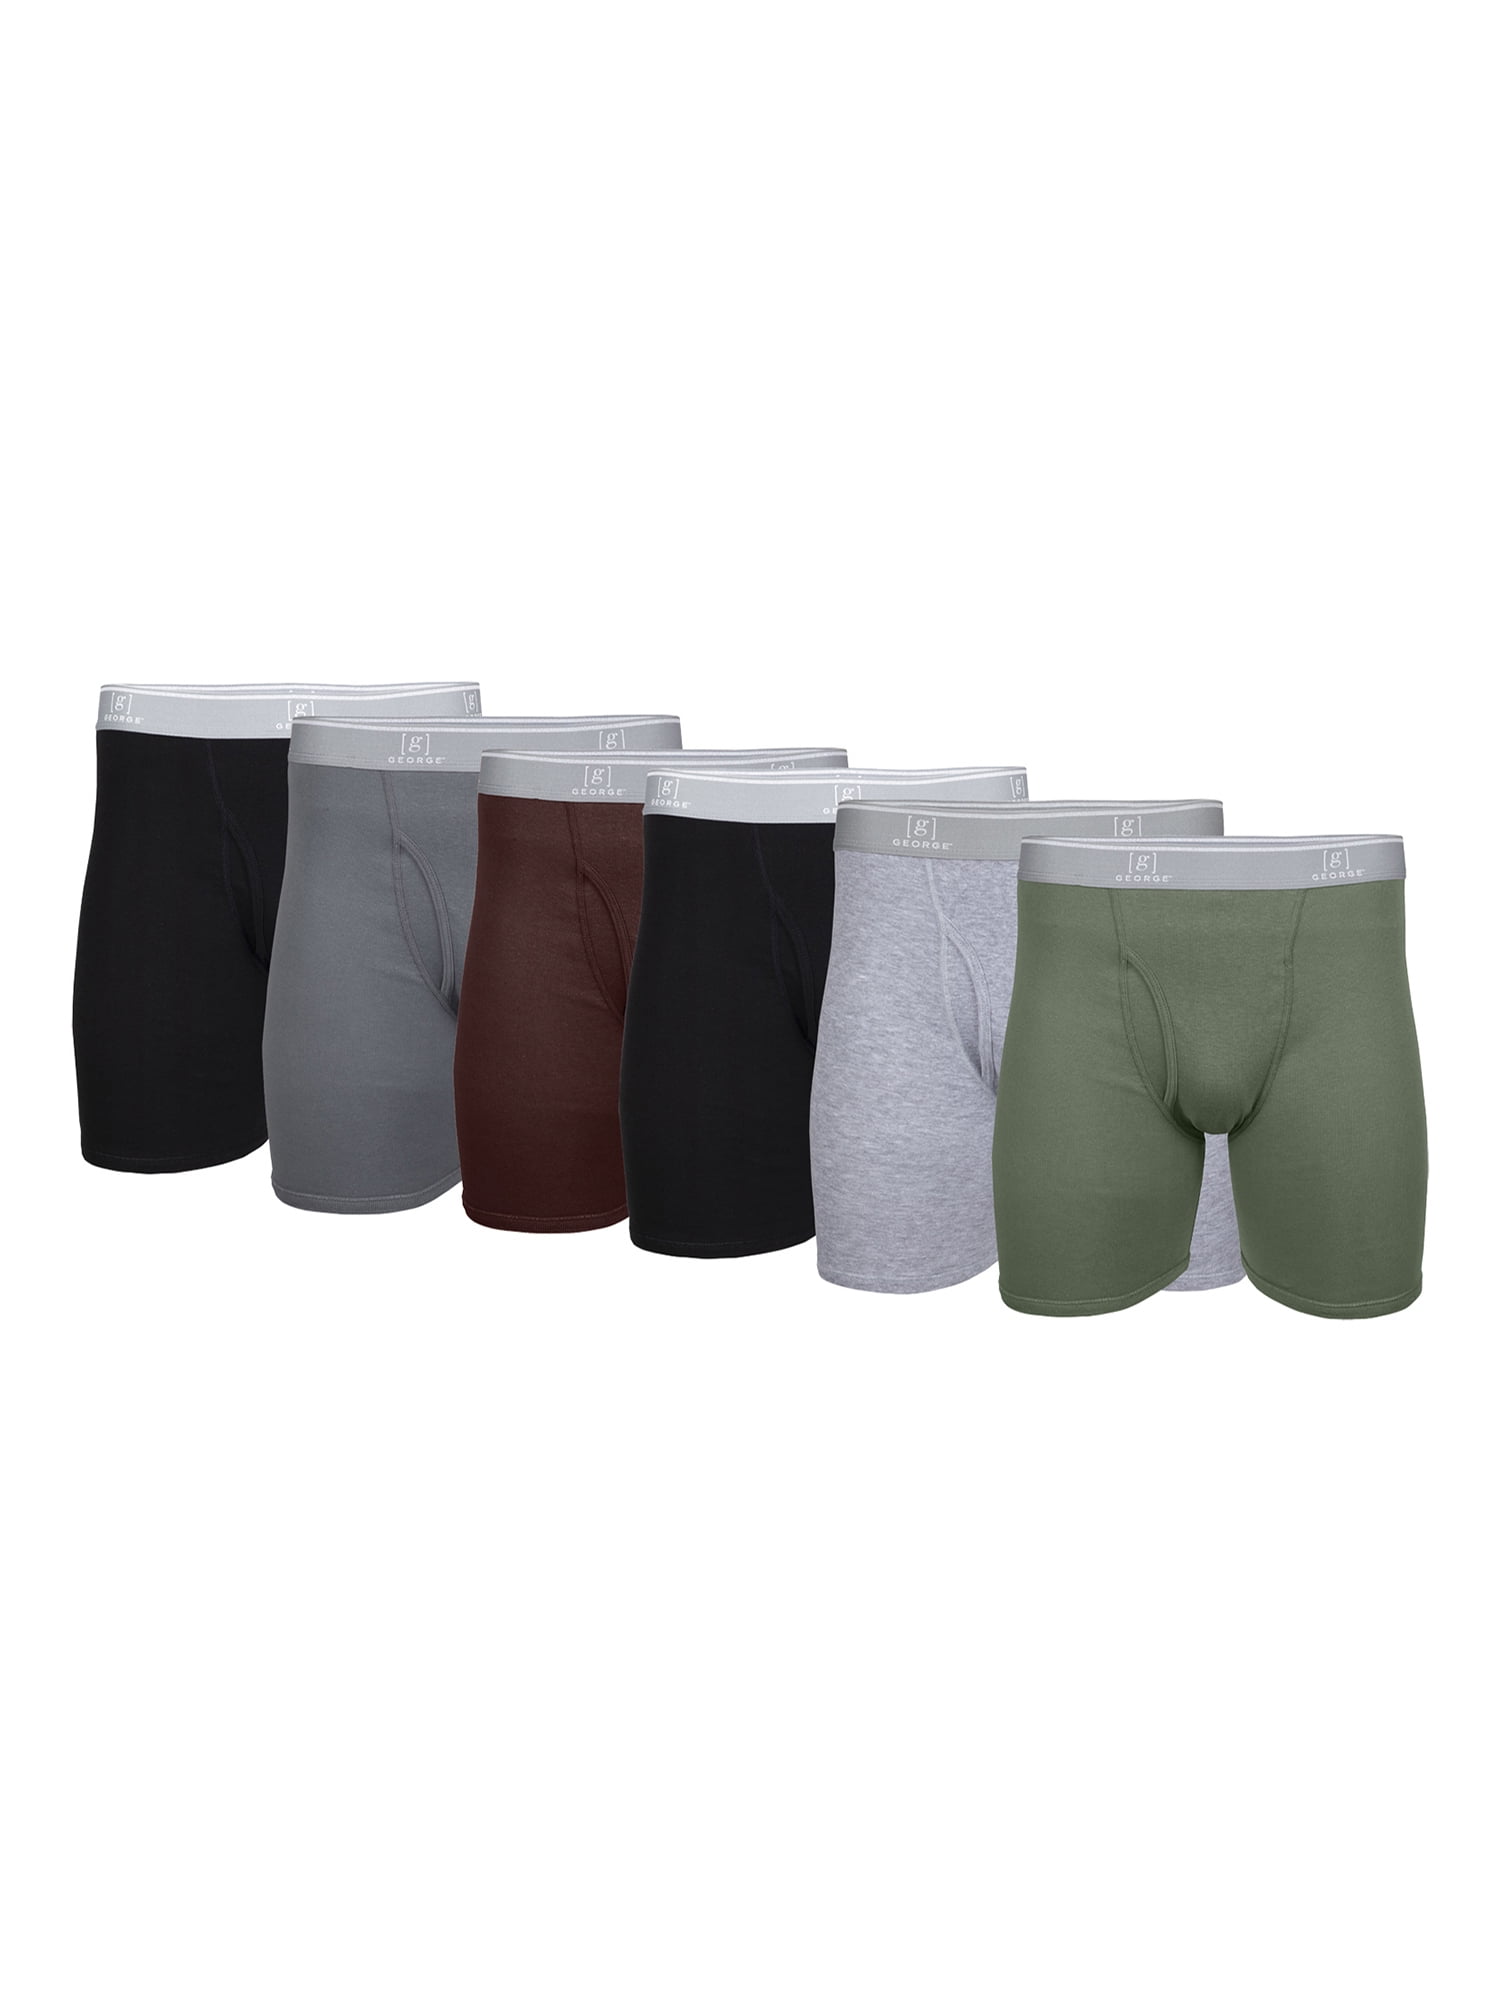 Gildan Adult Men's Regular Leg Boxer Briefs, 5-Pack, Sizes S-2XL, 6 Inseam  